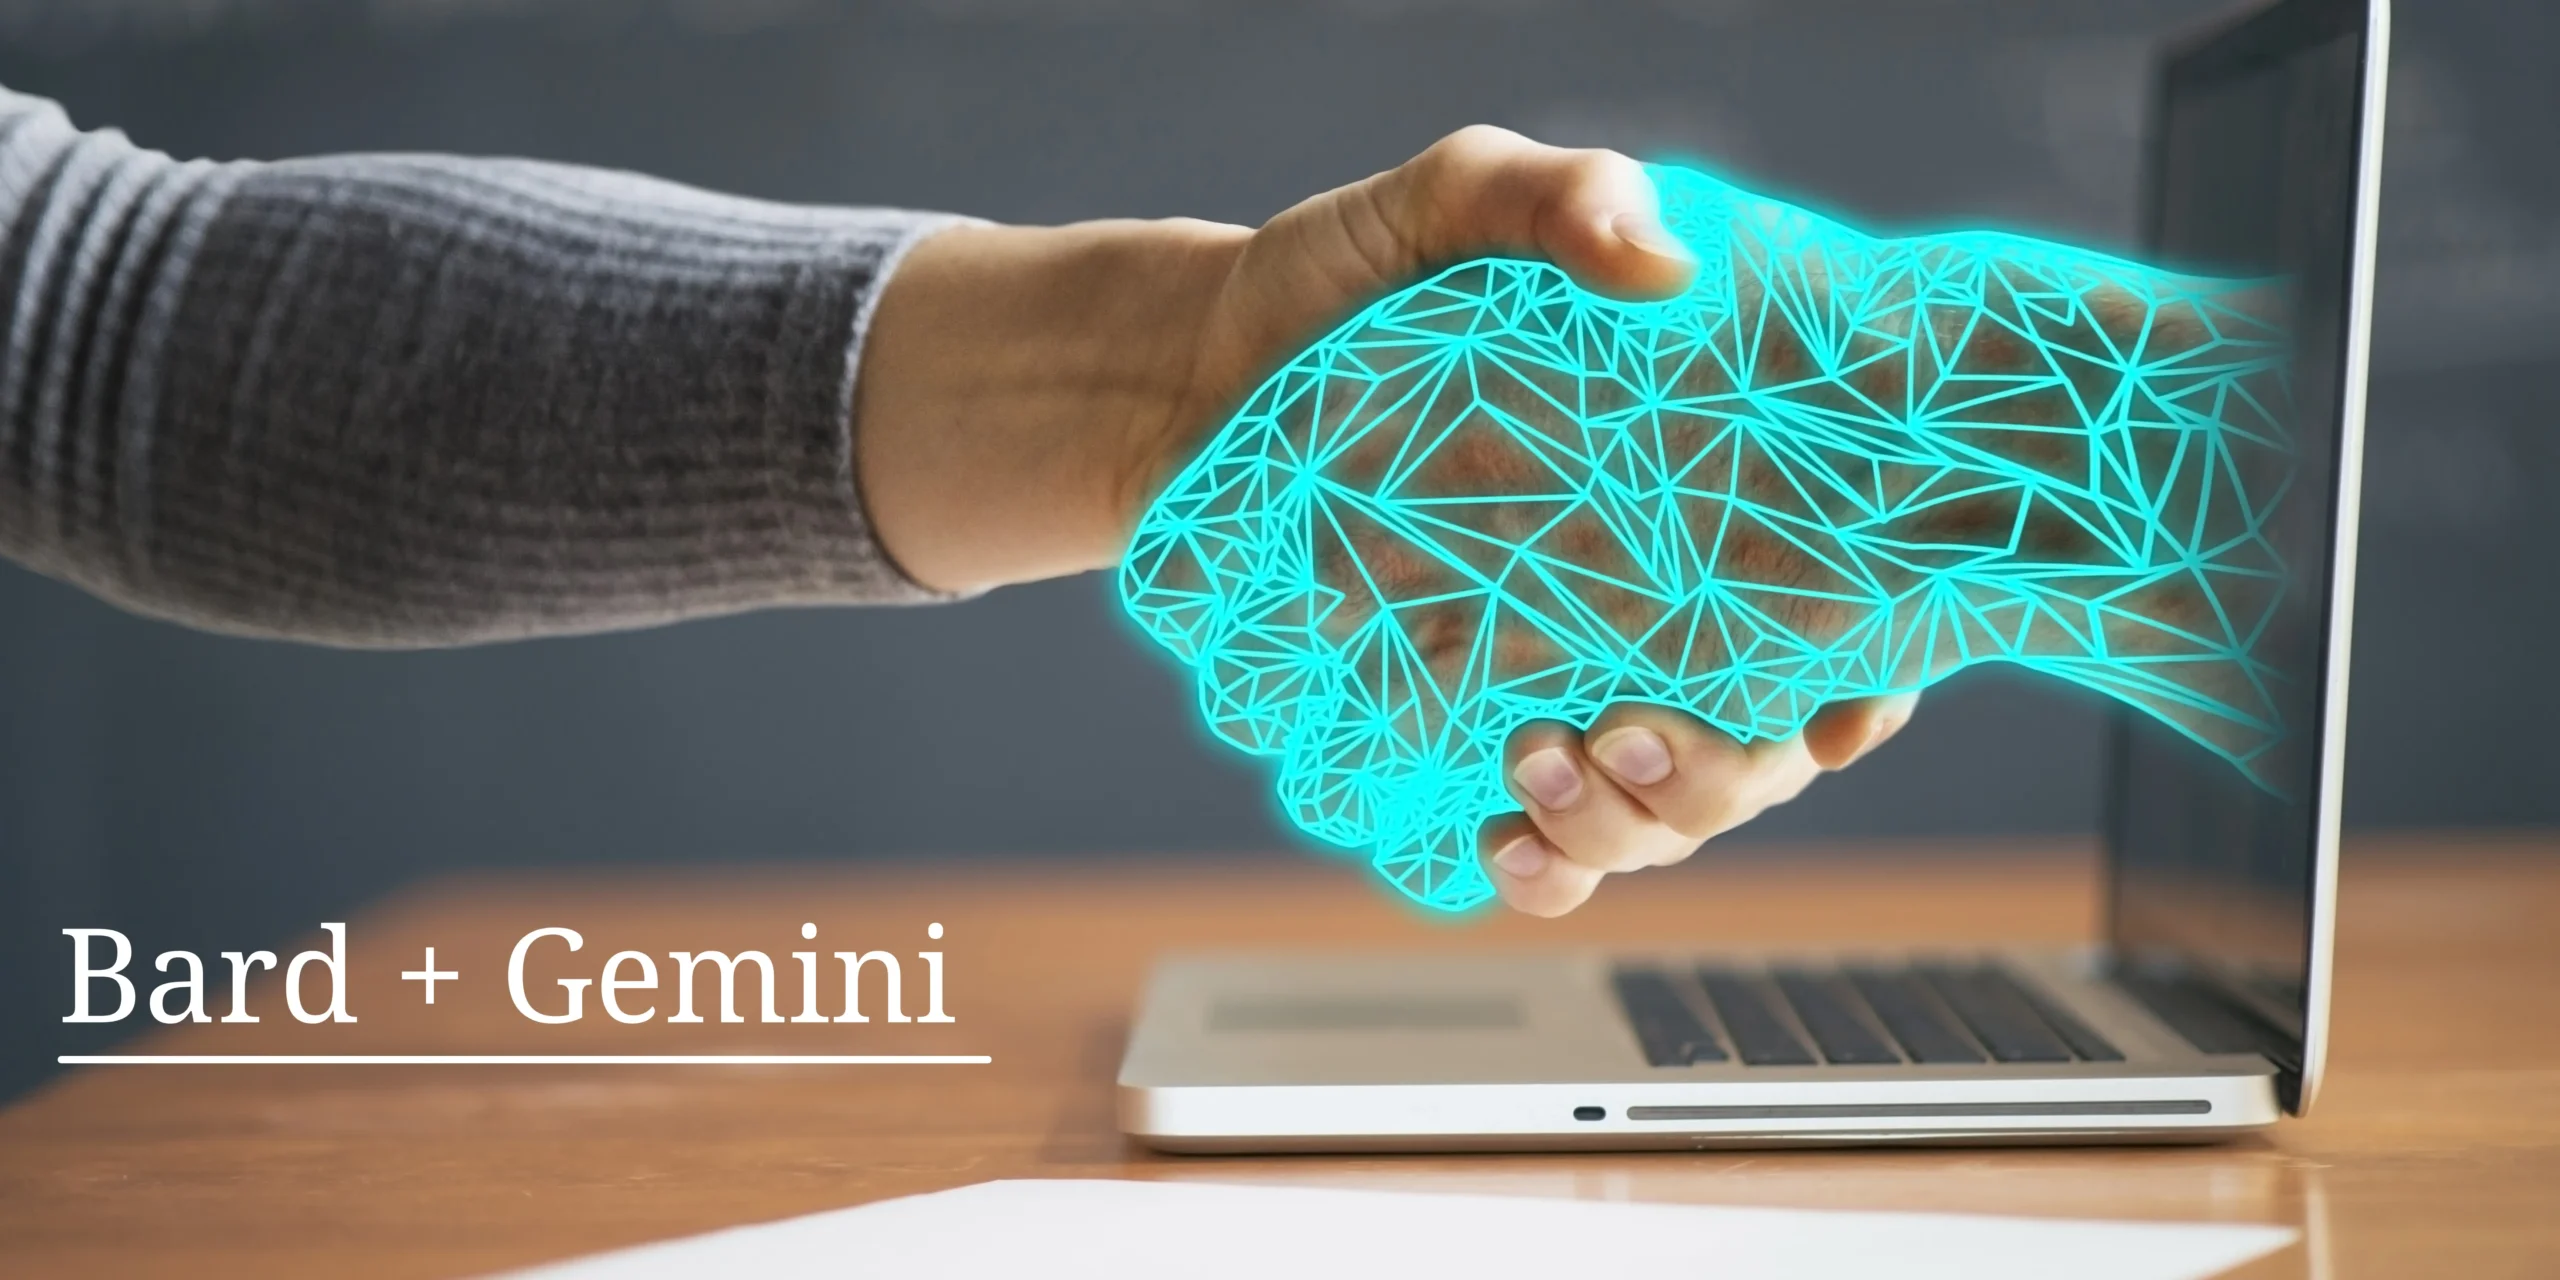 Bard and Gemini: The Future of AI Interaction